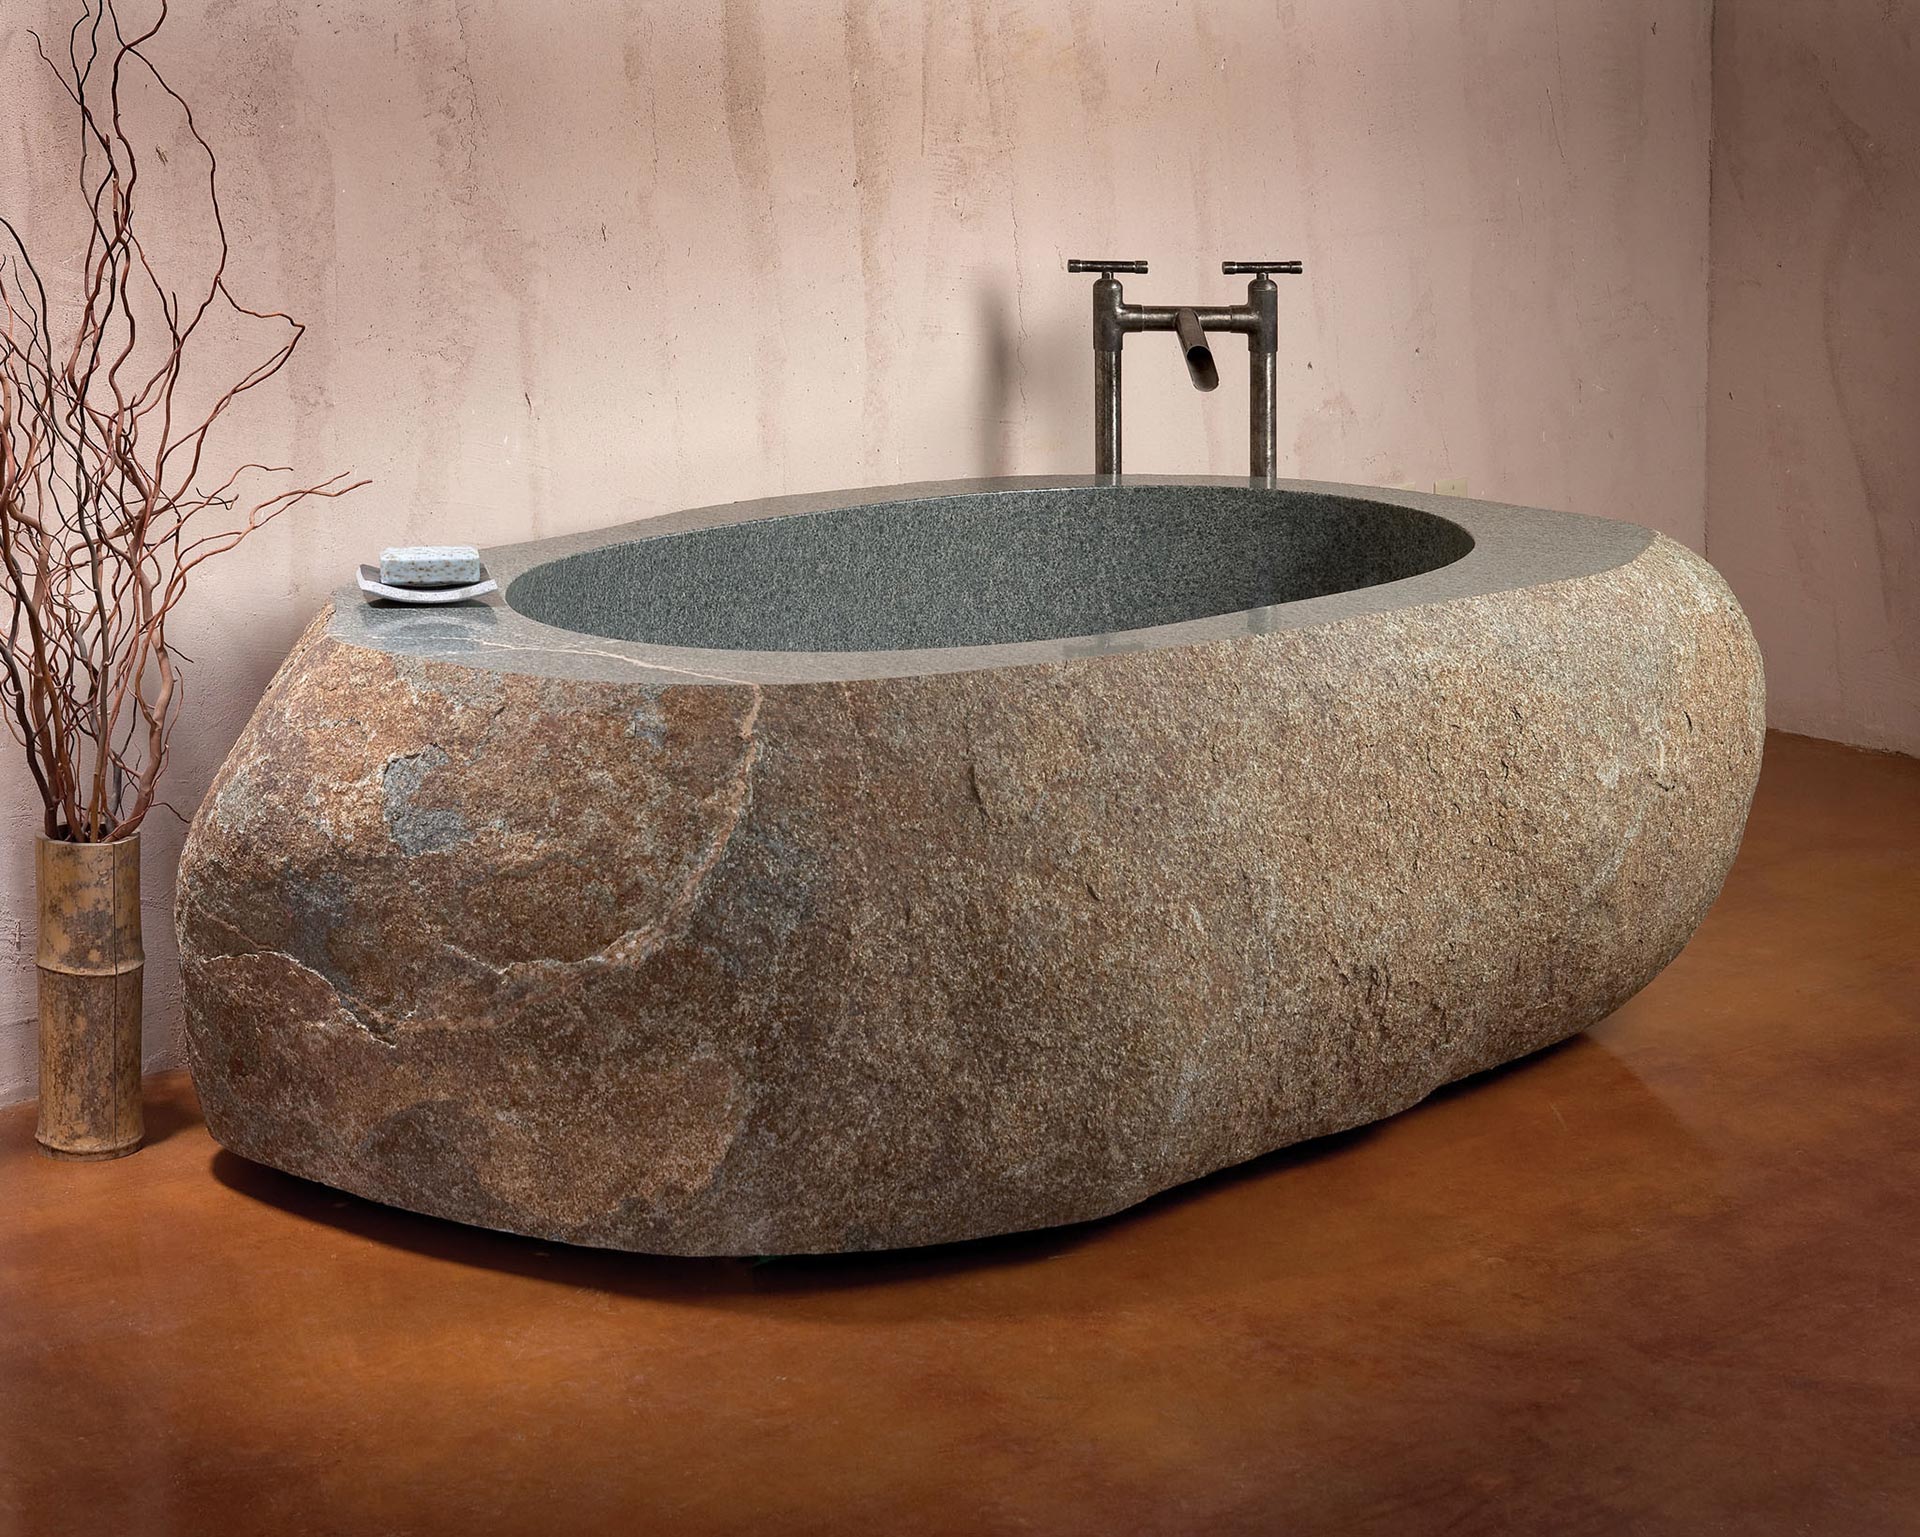 Big Granite Stone Bathtub